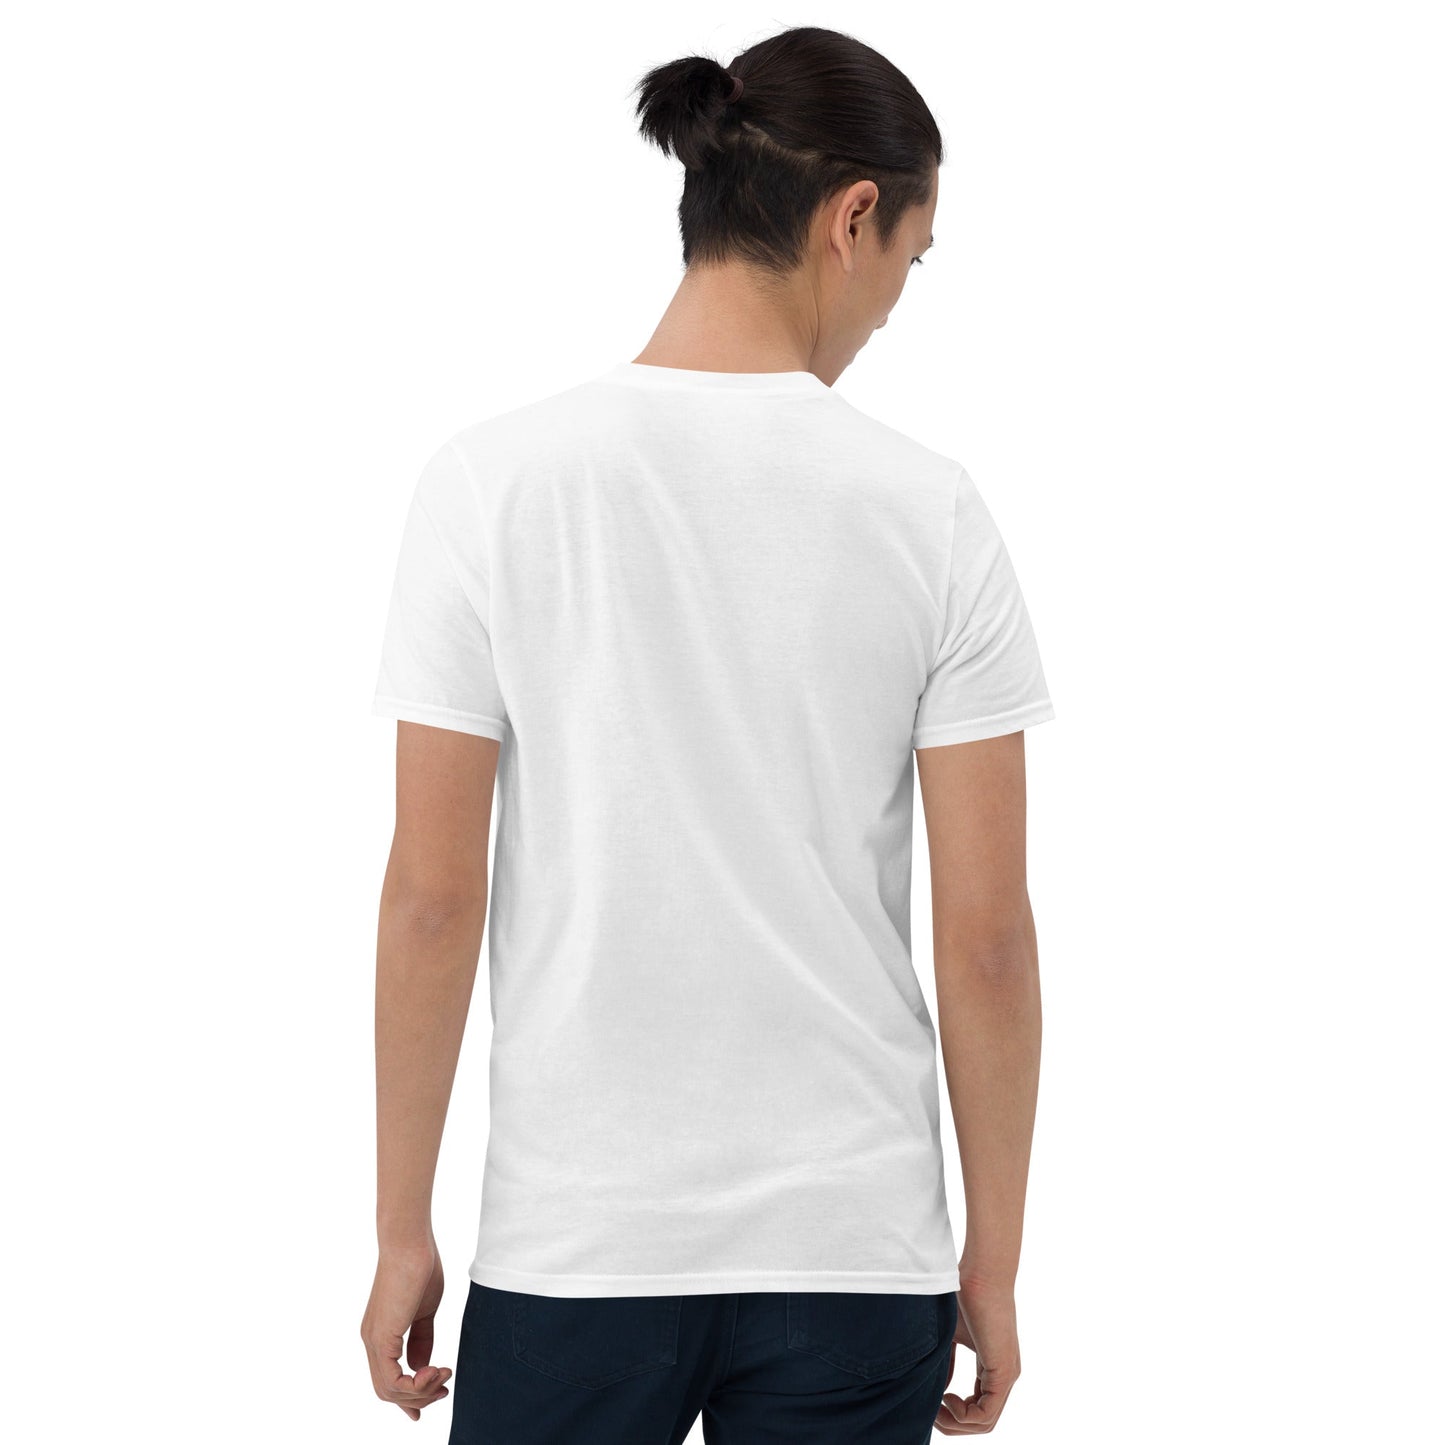 Short-Sleeve Unisex T-Shirt, Everyday is Earth day t-shirts || Outdoor Luxus OutDoor Luxus